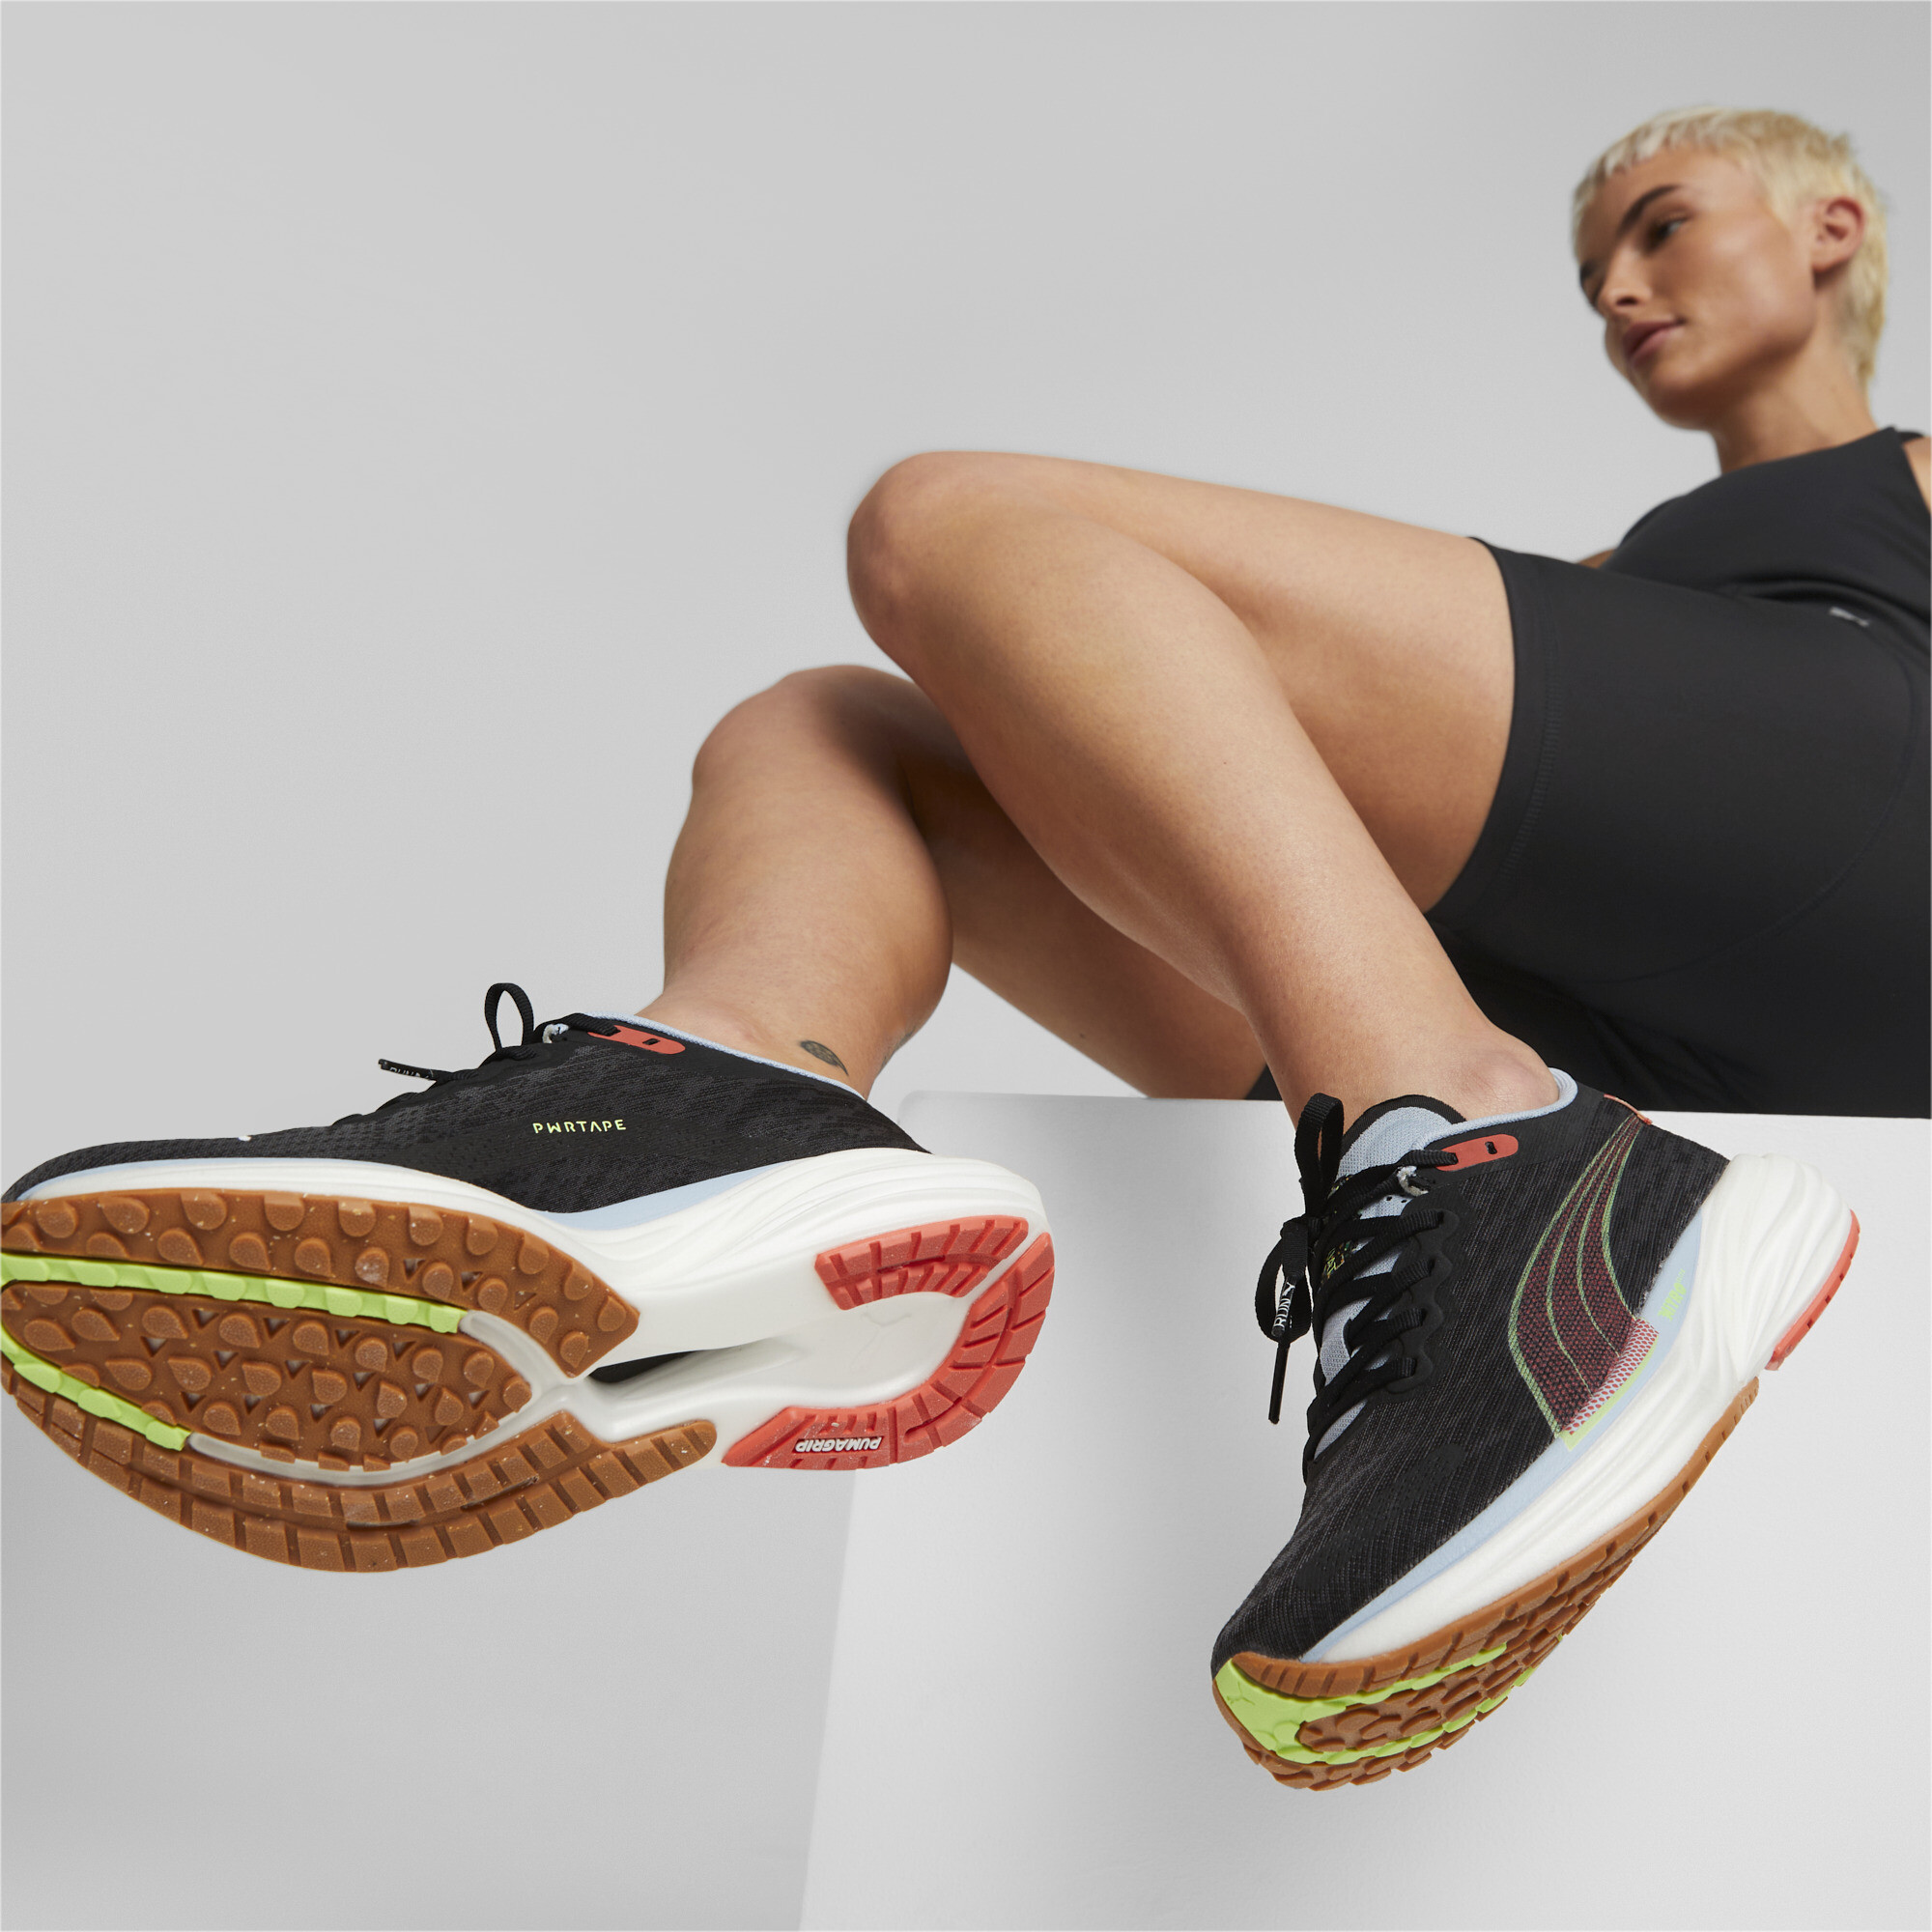 Women's PUMA X FIRST MILE Deviate NITRO 2 Running Shoes Women In Black, Size EU 36